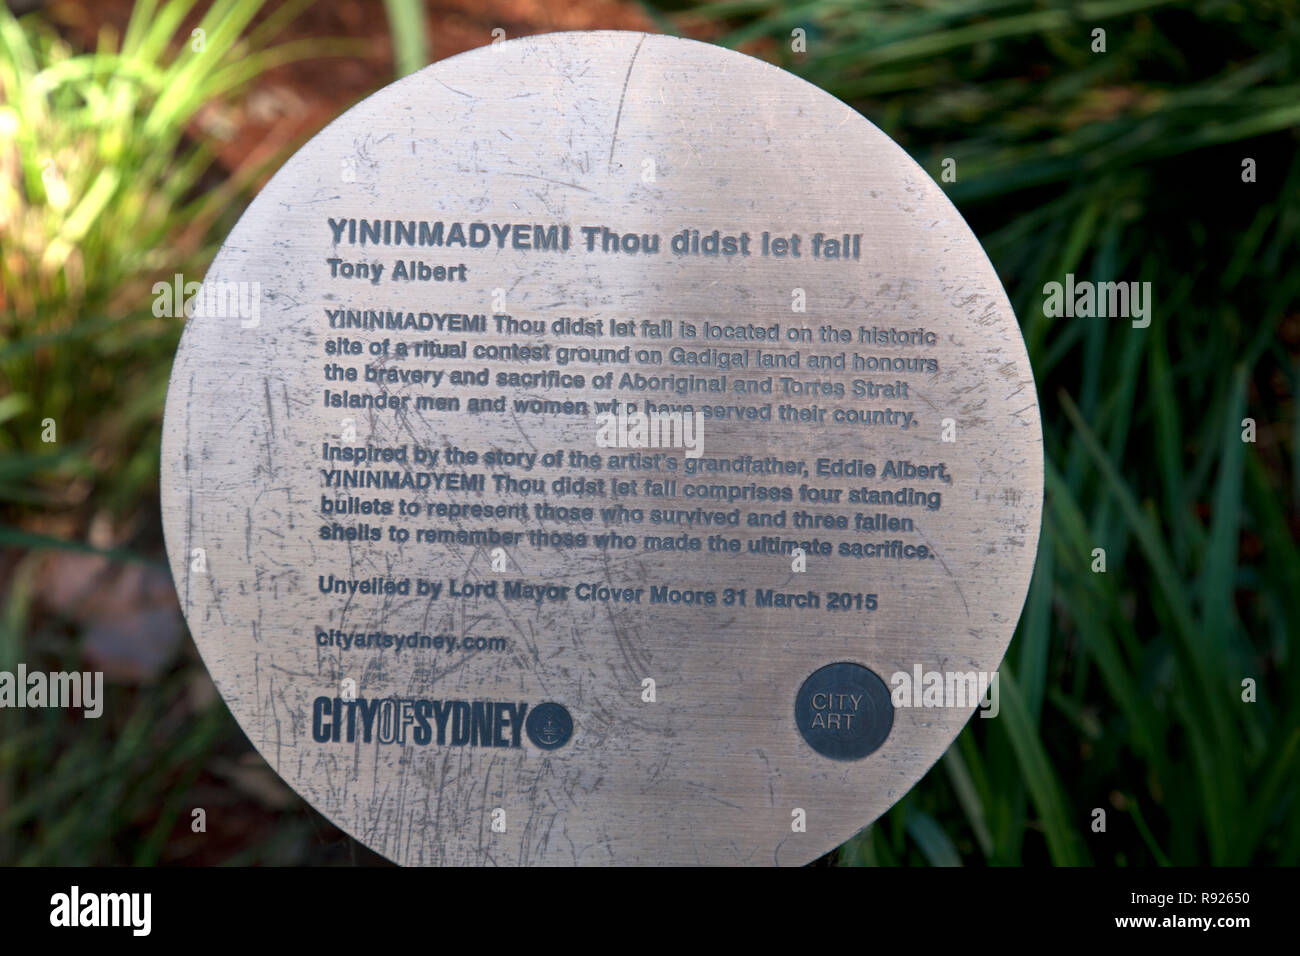 La placca yininmadyemi tu hai lasciato cadere da tony albert sulla terra gadigal hyde park sydney New South Wales AUSTRALIA Foto Stock